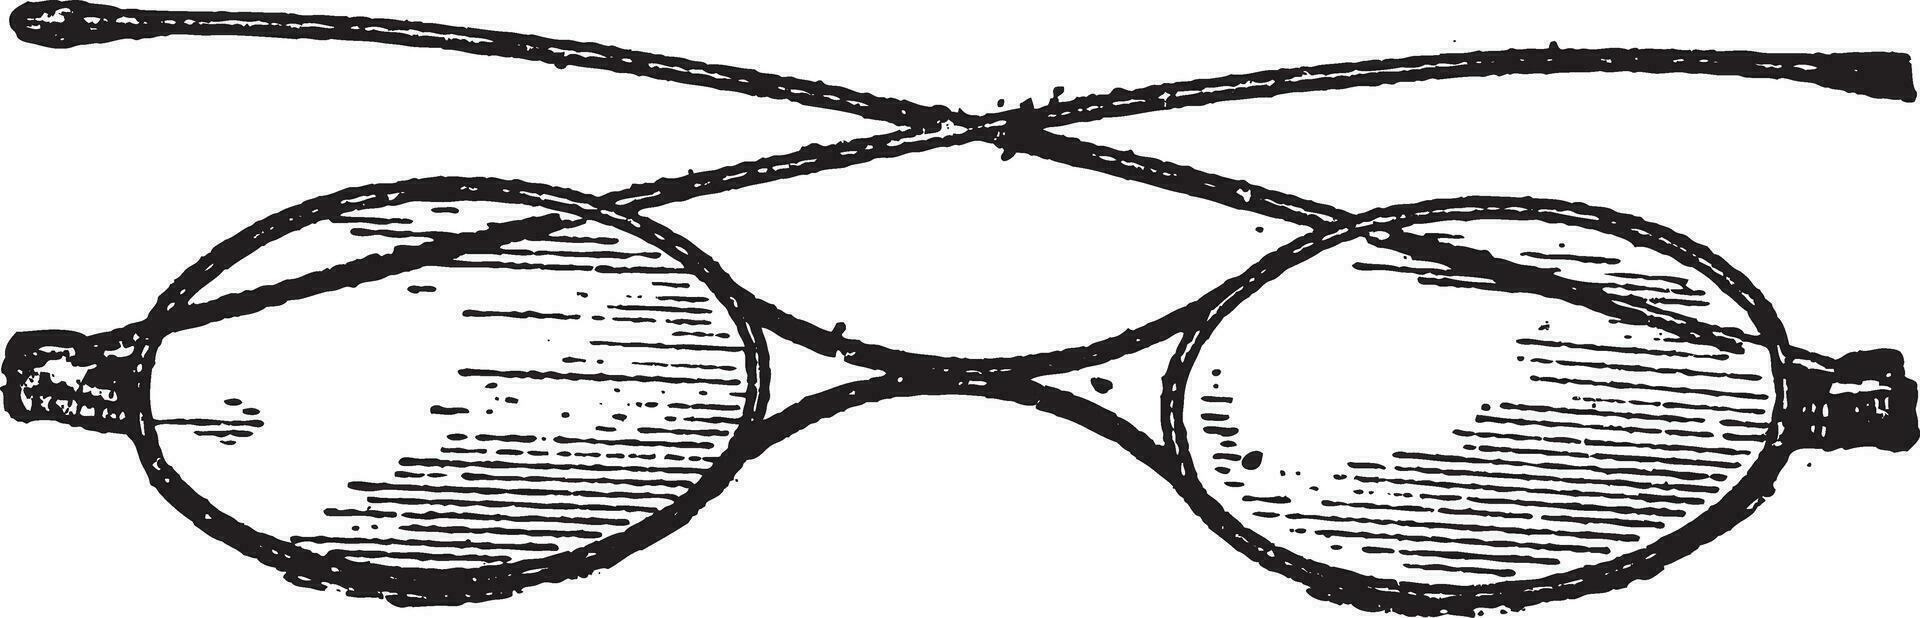 Gläser, x Brücke, Jahrgang Gravur. vektor